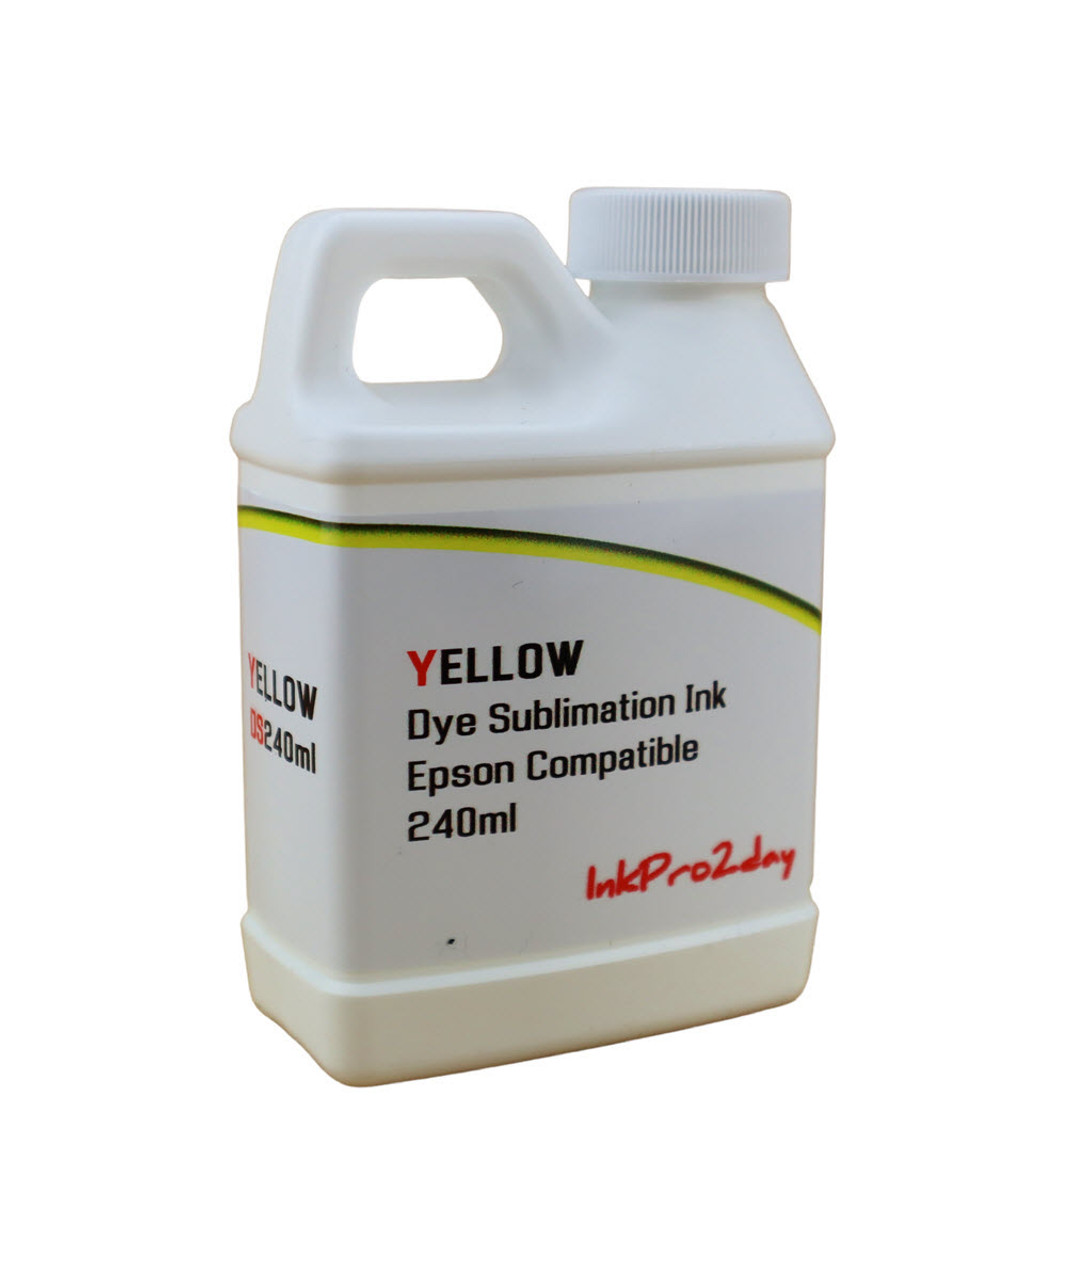 Yellow 240ml Bottle Dye Sublimation Ink for Epson Stylus Pro 4880 printers